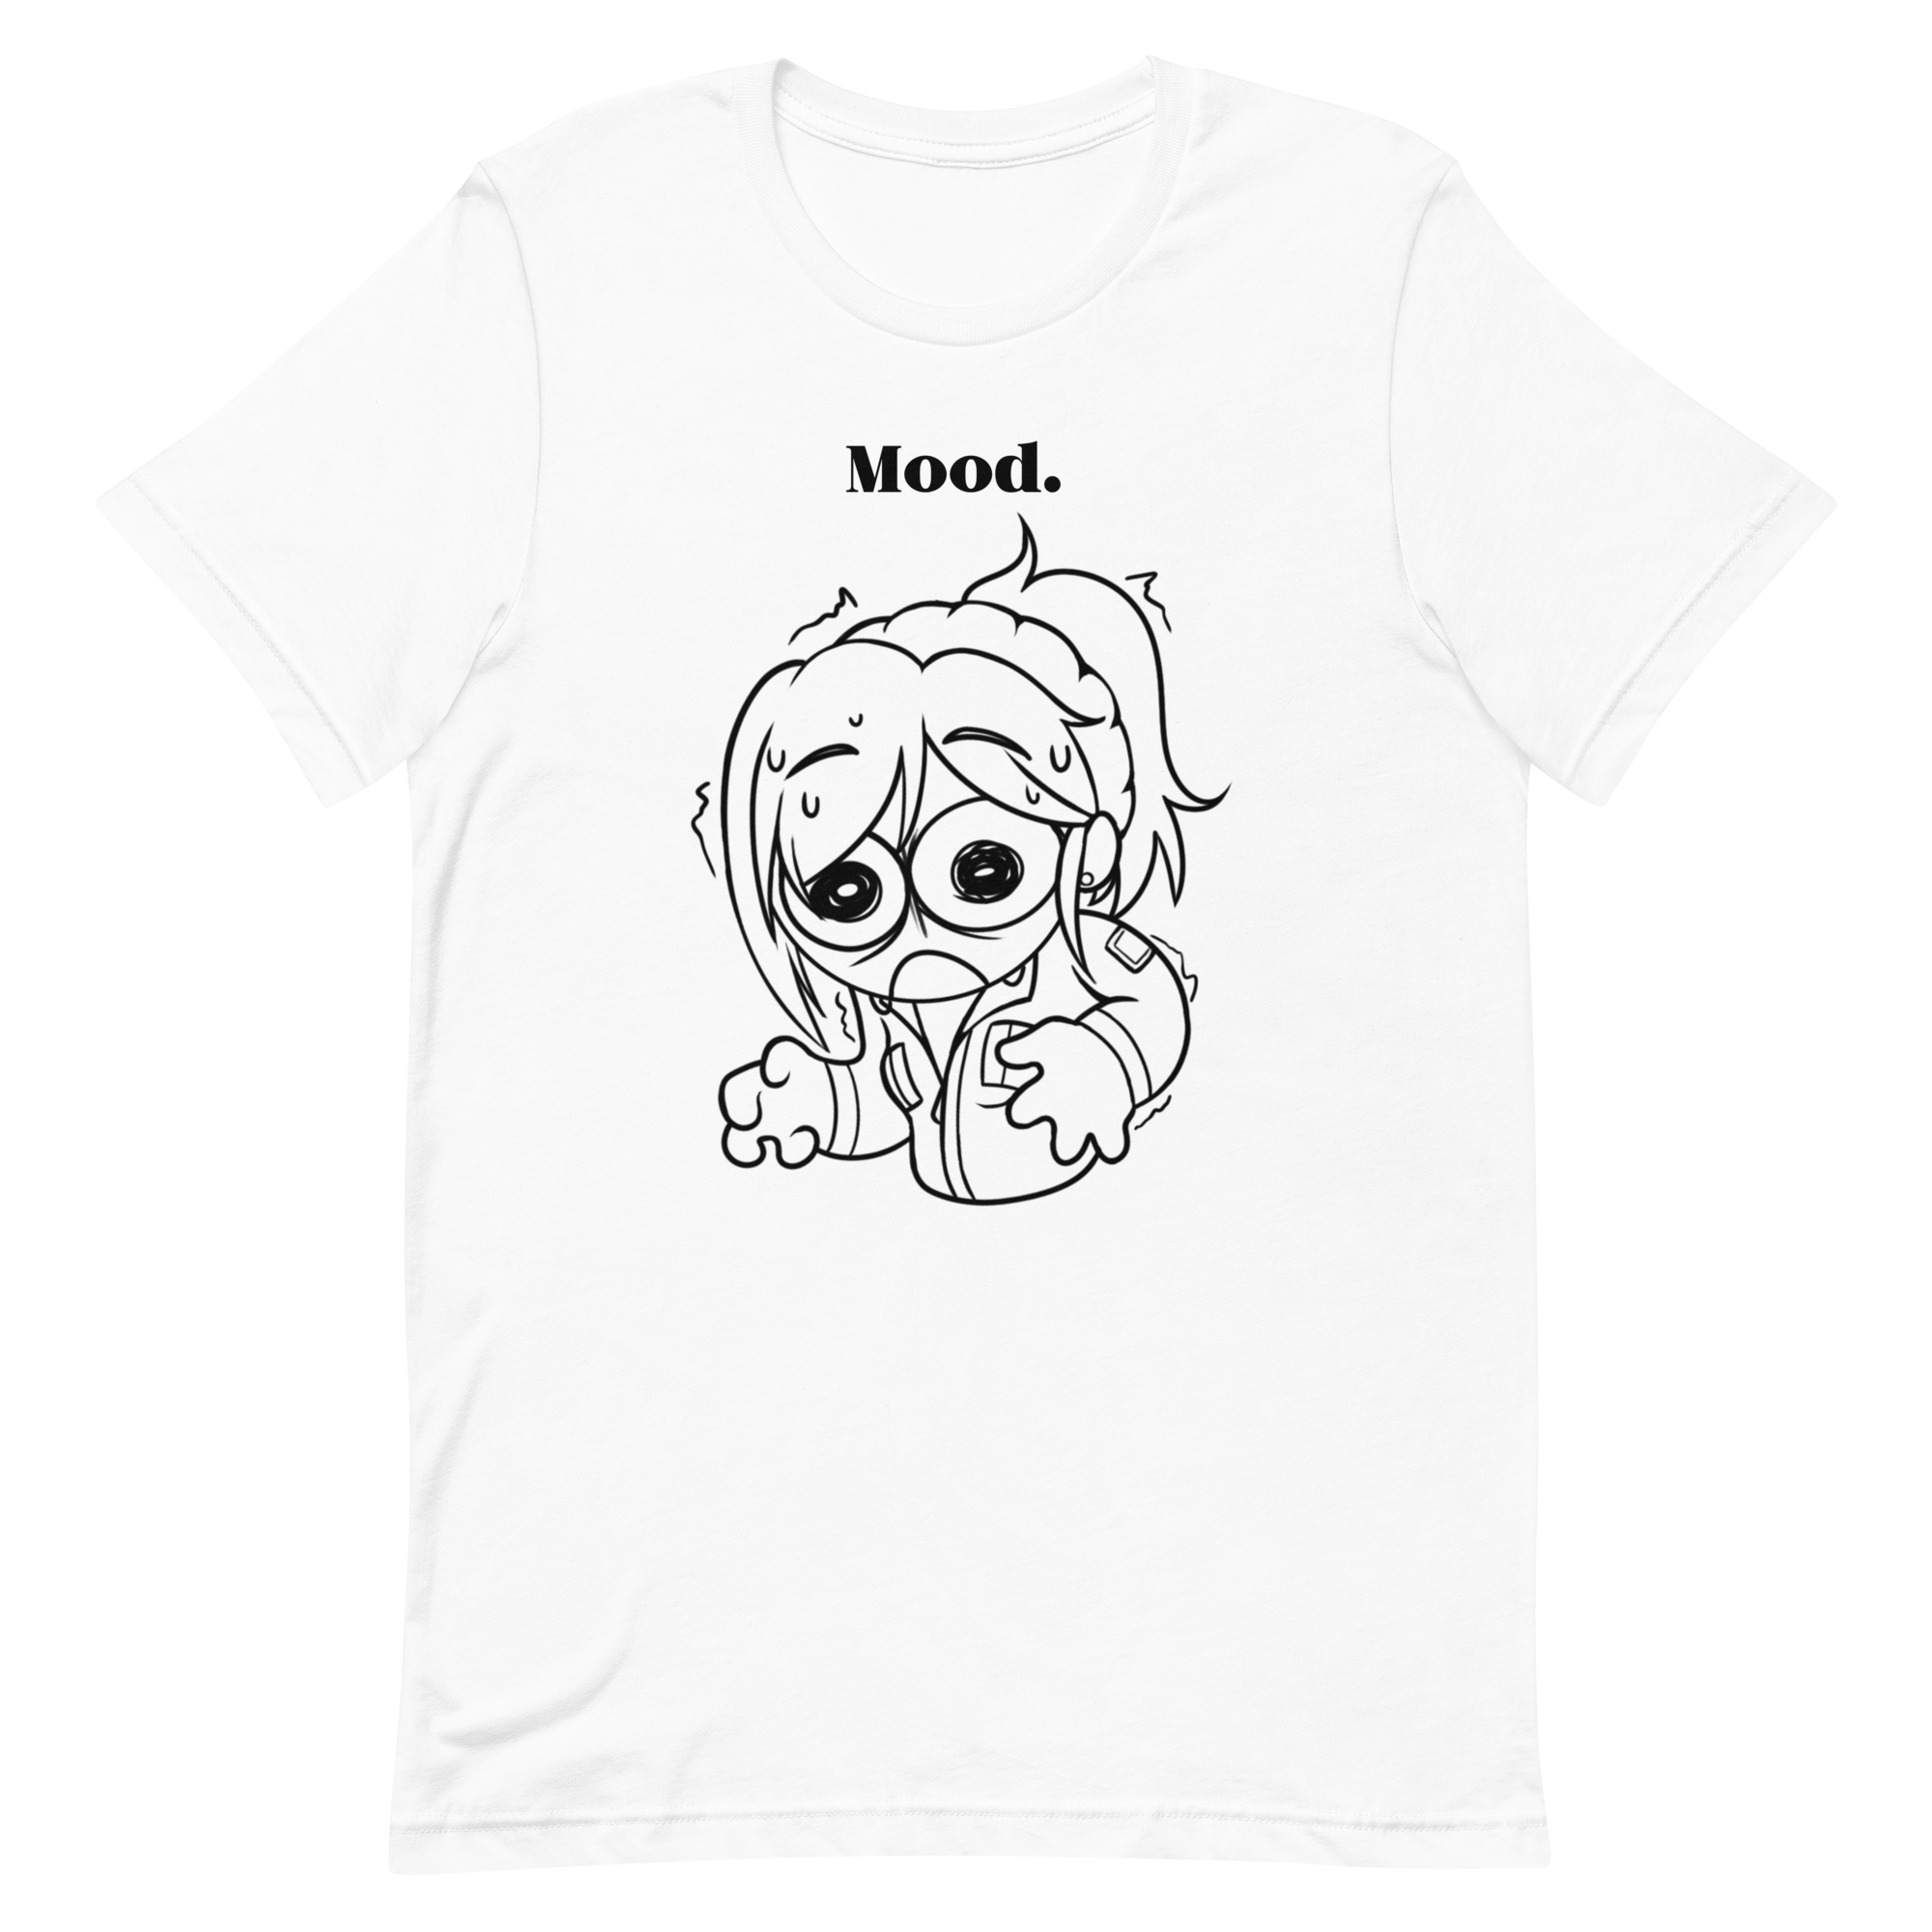 Mood shirt